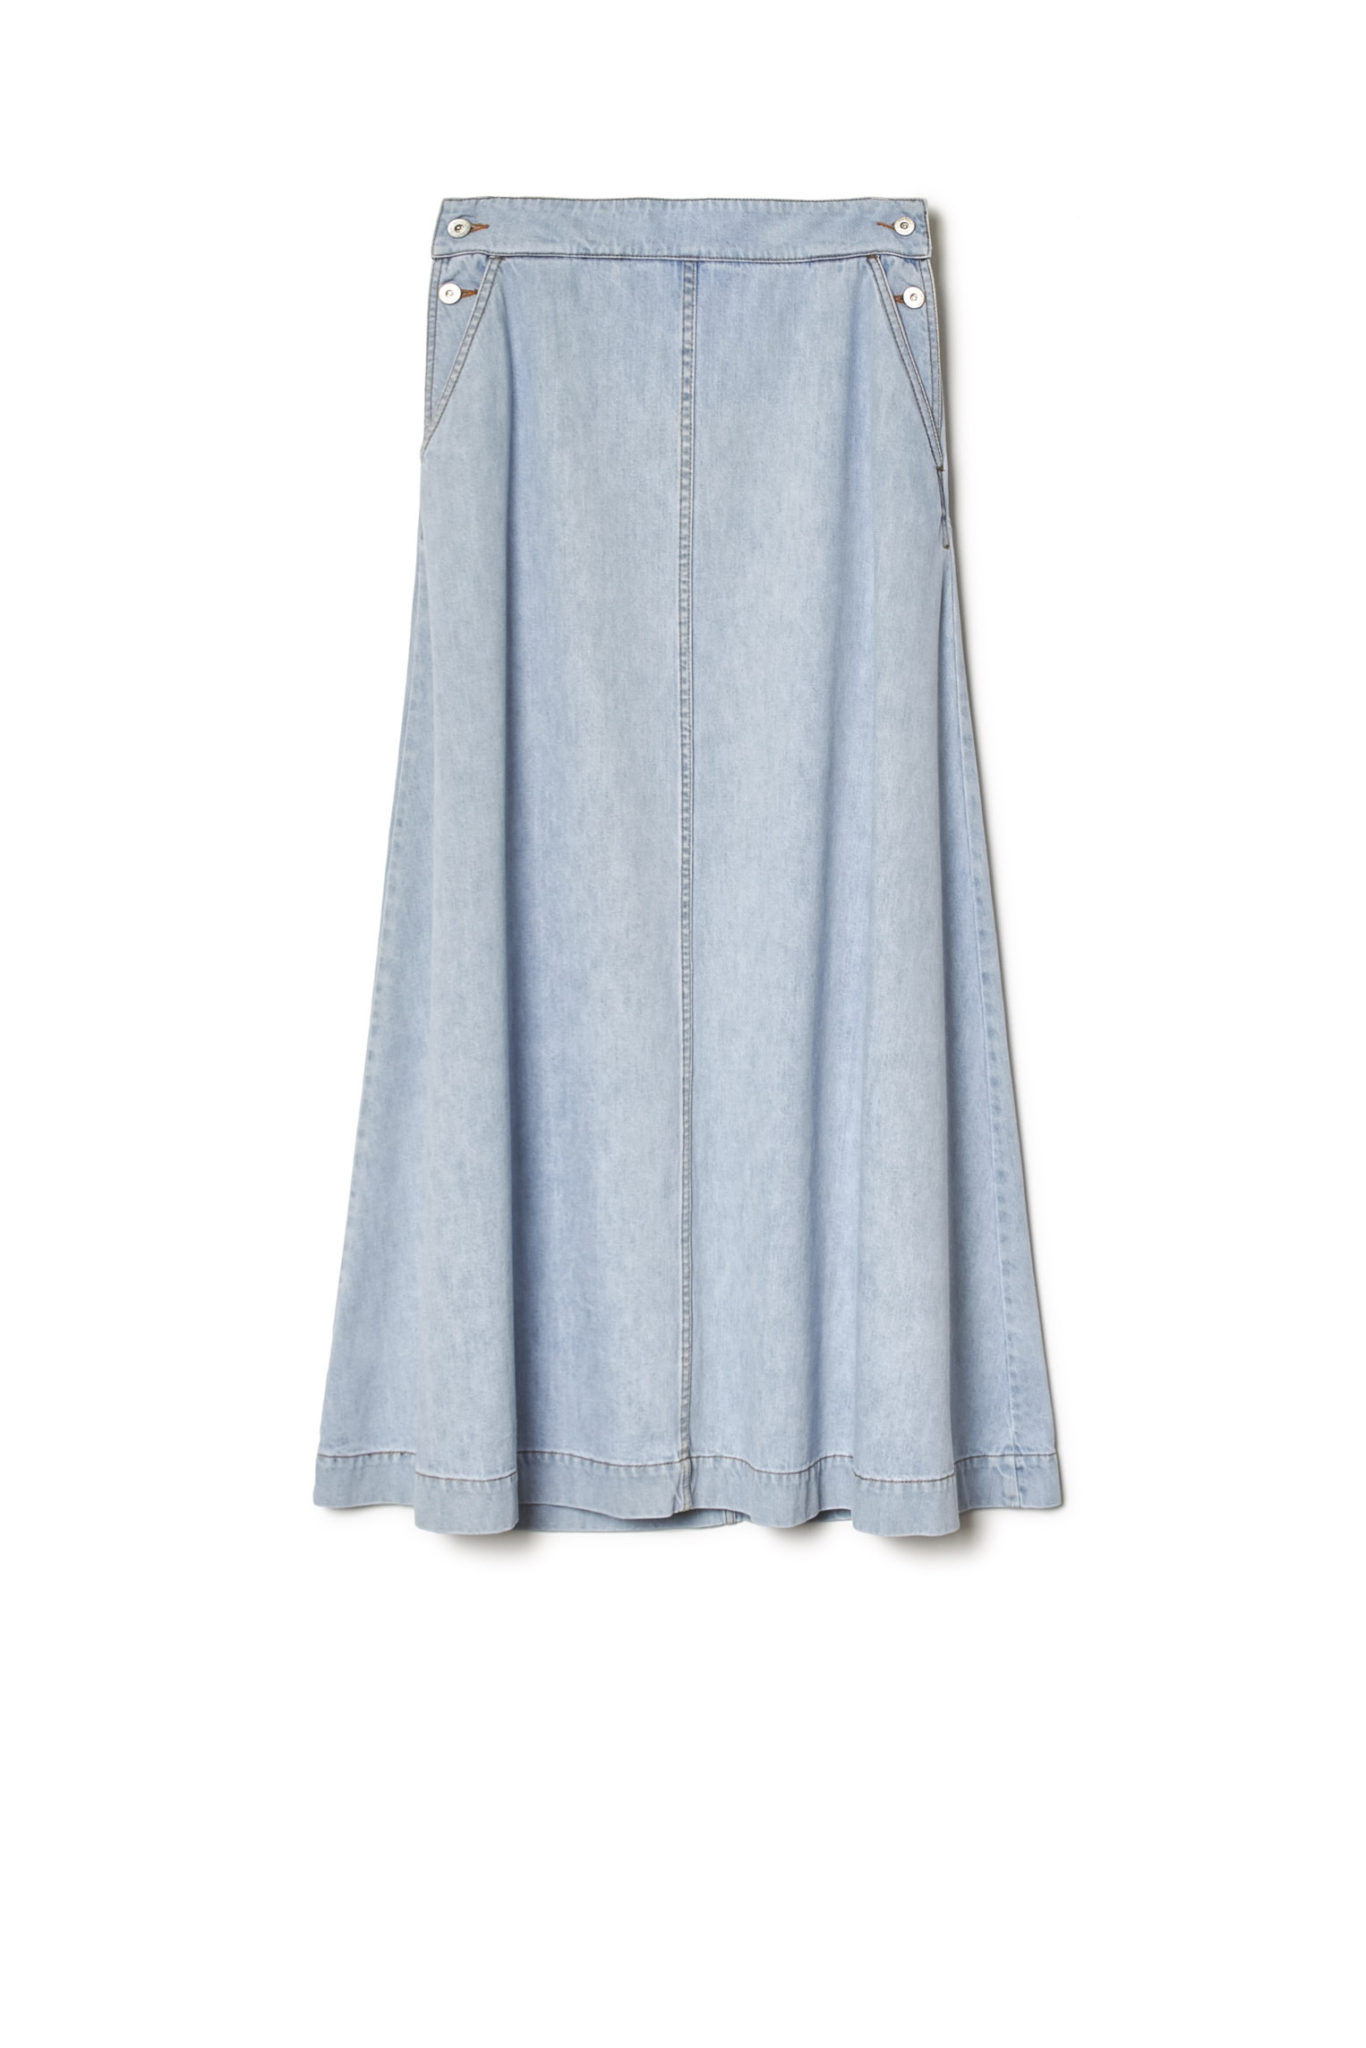 pale blue denim skirt